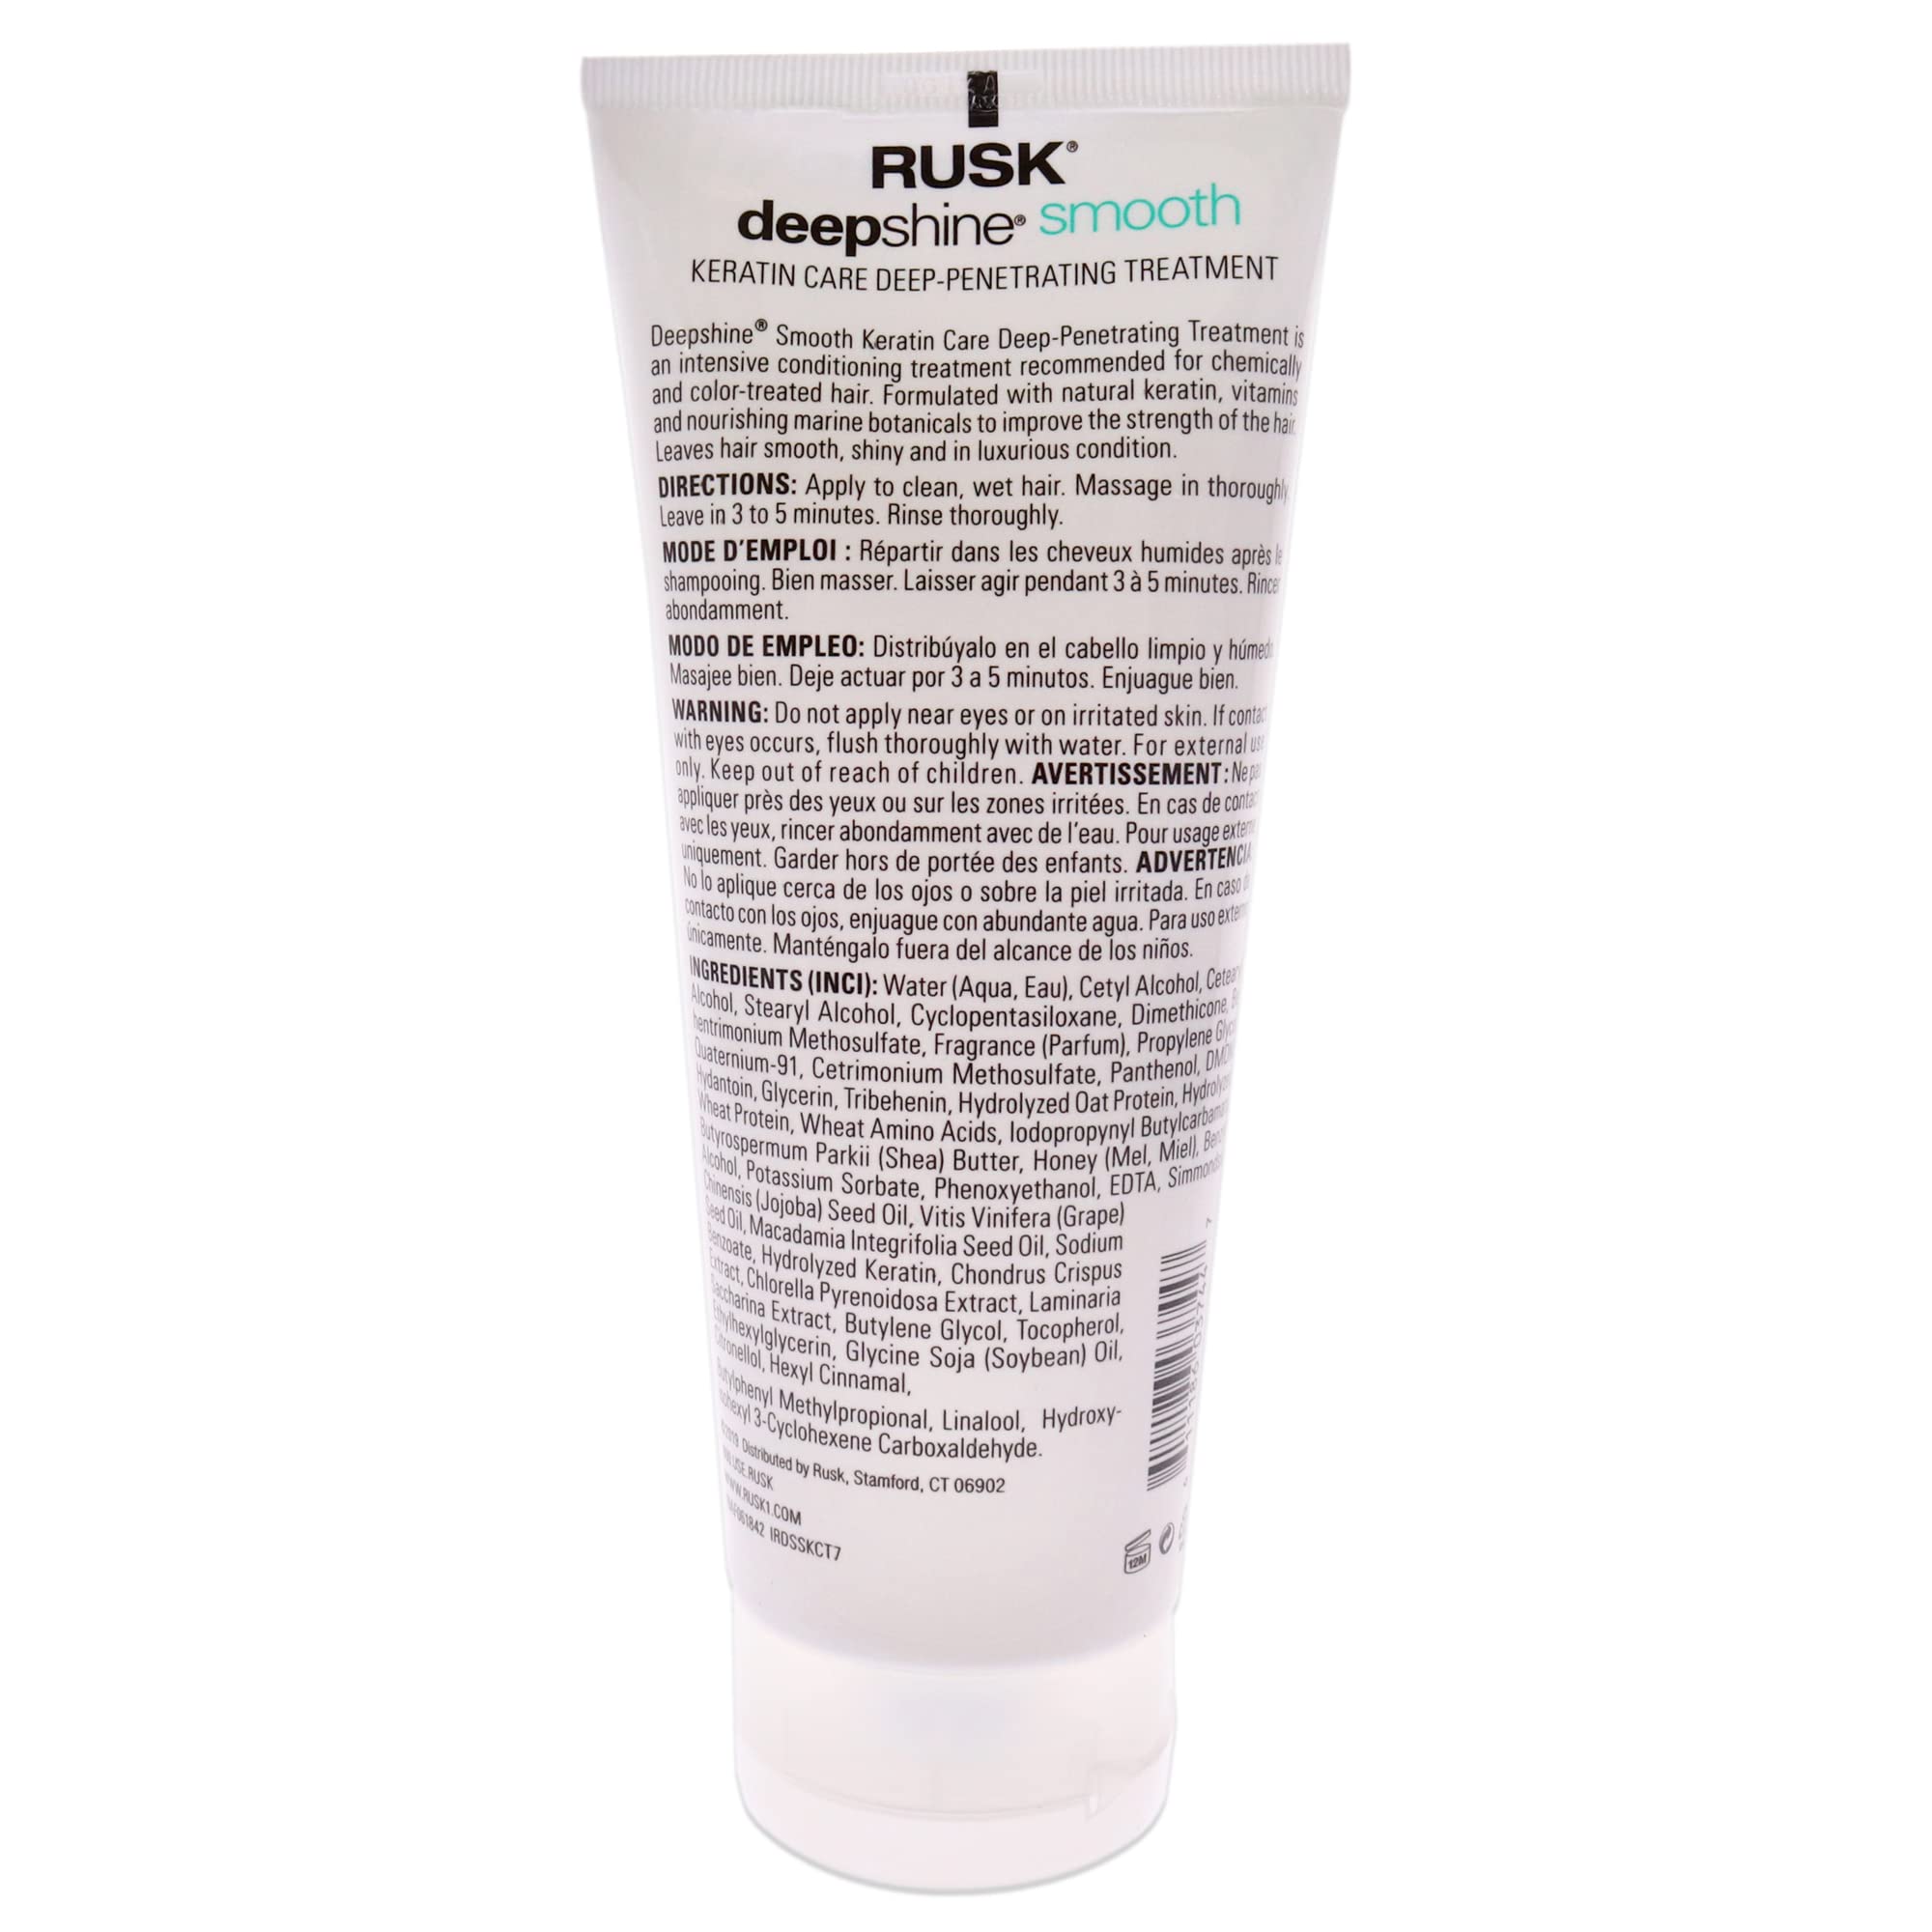 RUSK Deepshine Smooth Keratin Care Deep-Penetrating Treatment, 7 Oz, Sodium-Chloride-Free, Color-Safe, Deep Penetrating Restructuring Treatment, Delivers Surface-Smoothing Conditioning